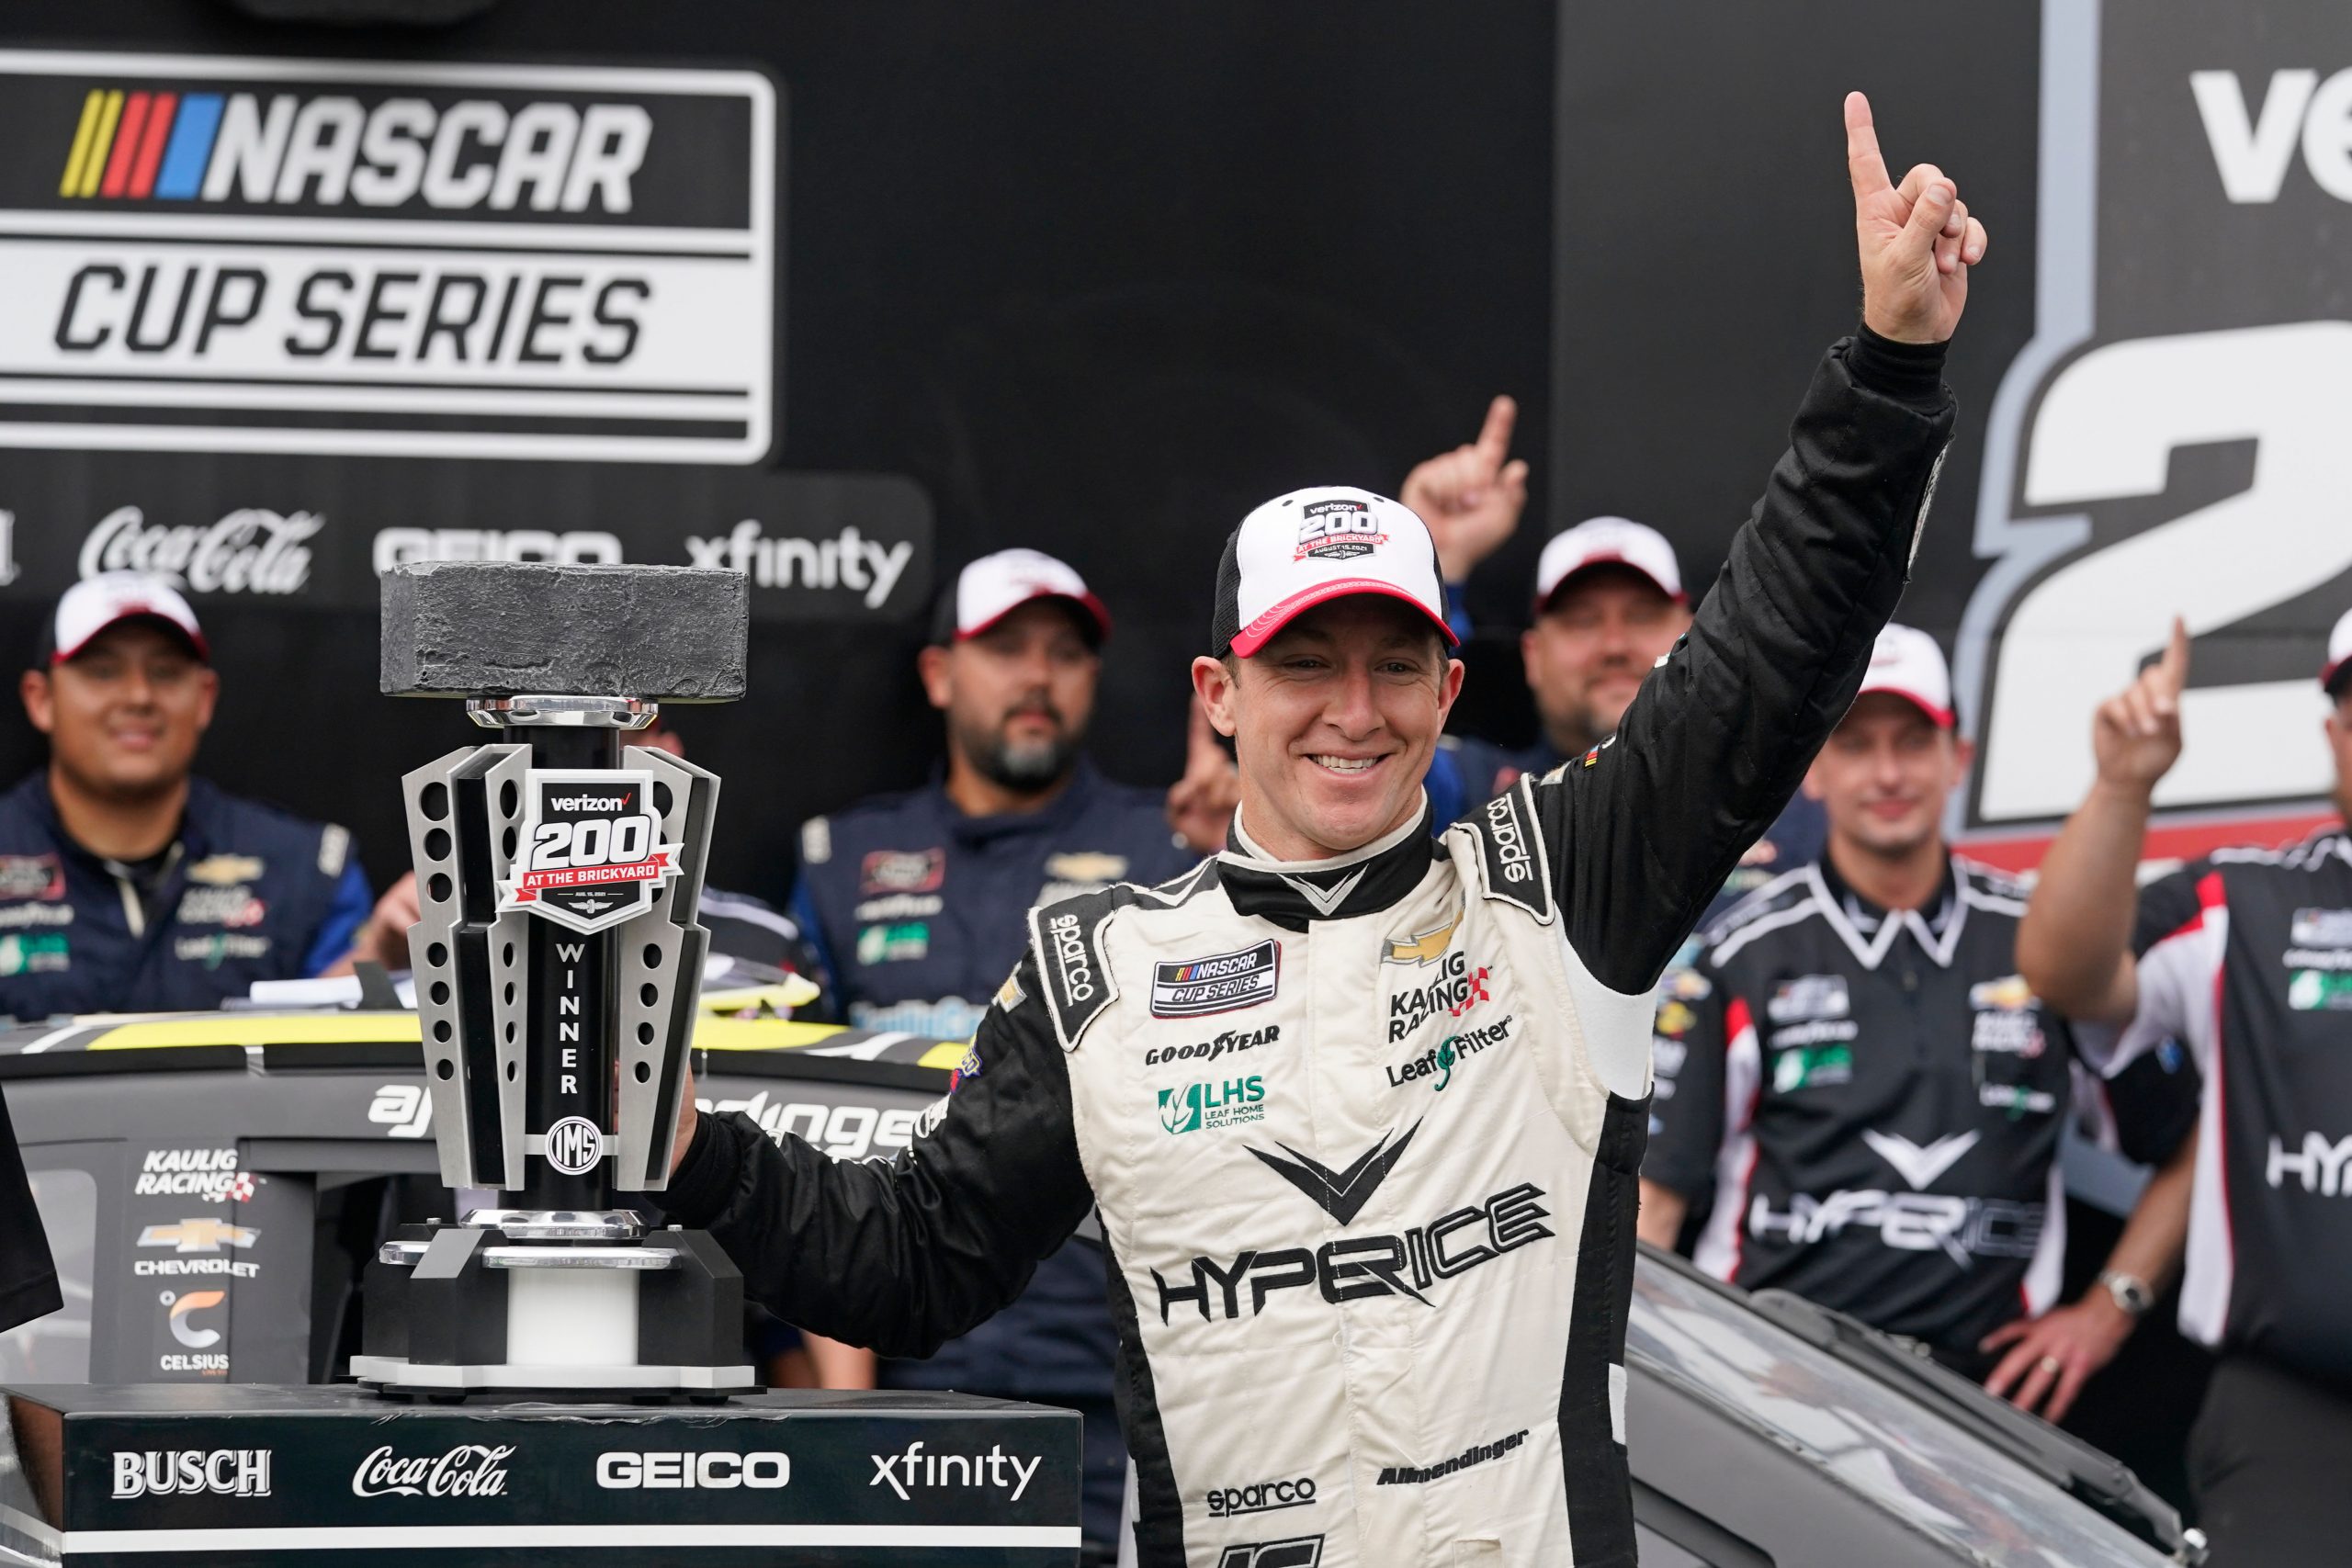 NASCAR: AJ Allmendinger wins the crash-marred Brickyard 200 title